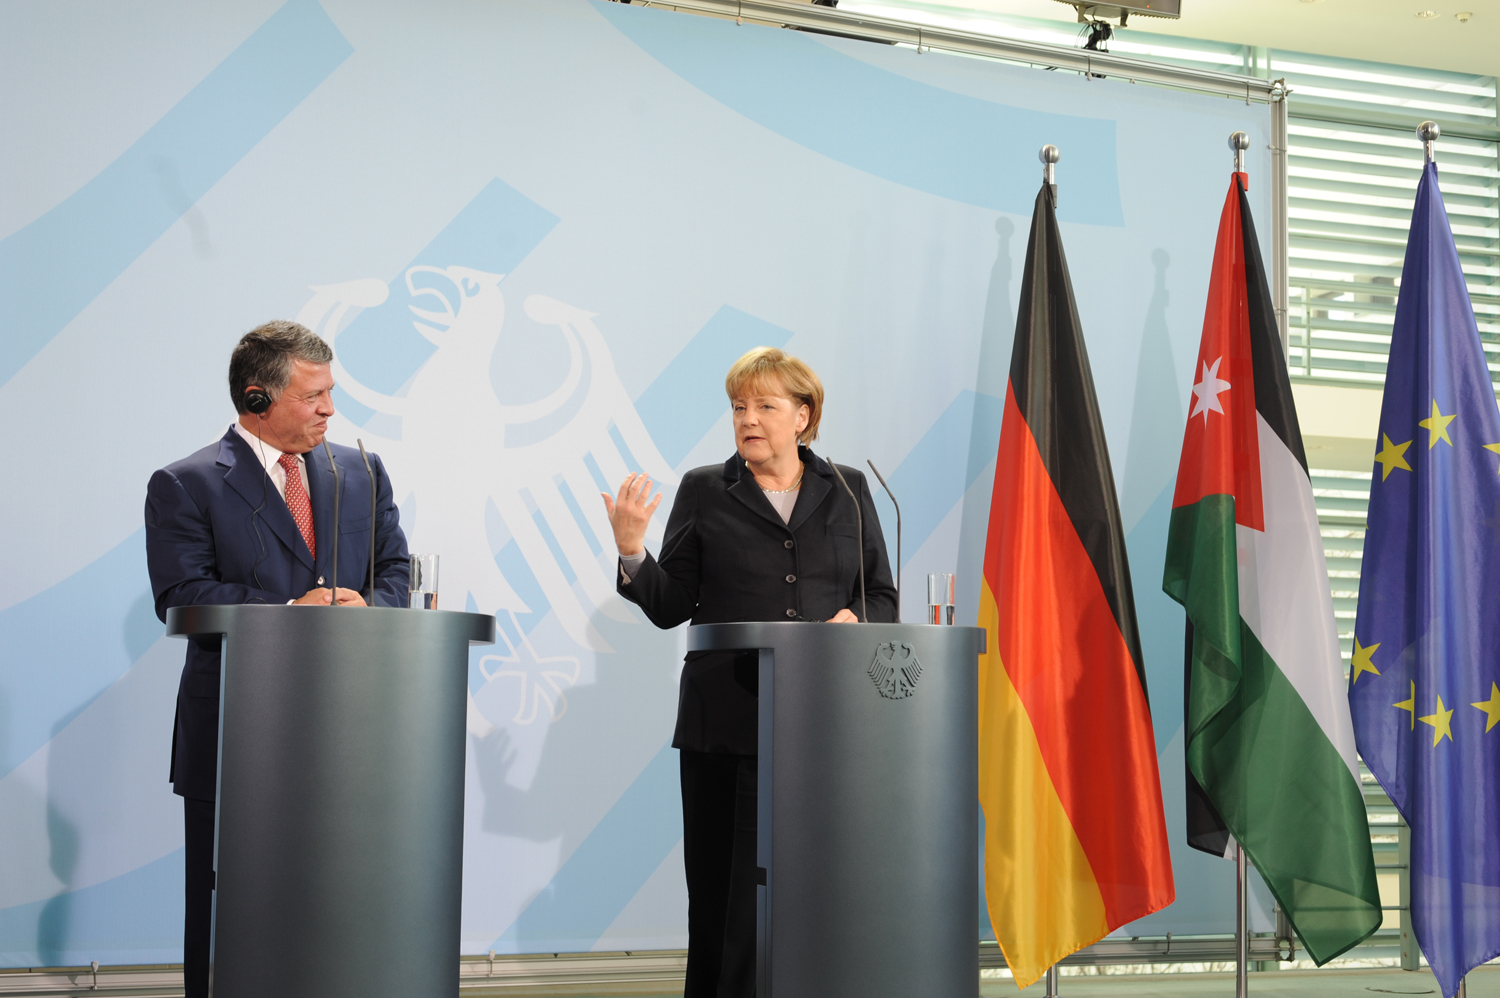 Jordanian King Abdullah II with German Chancellor Angela Merkel